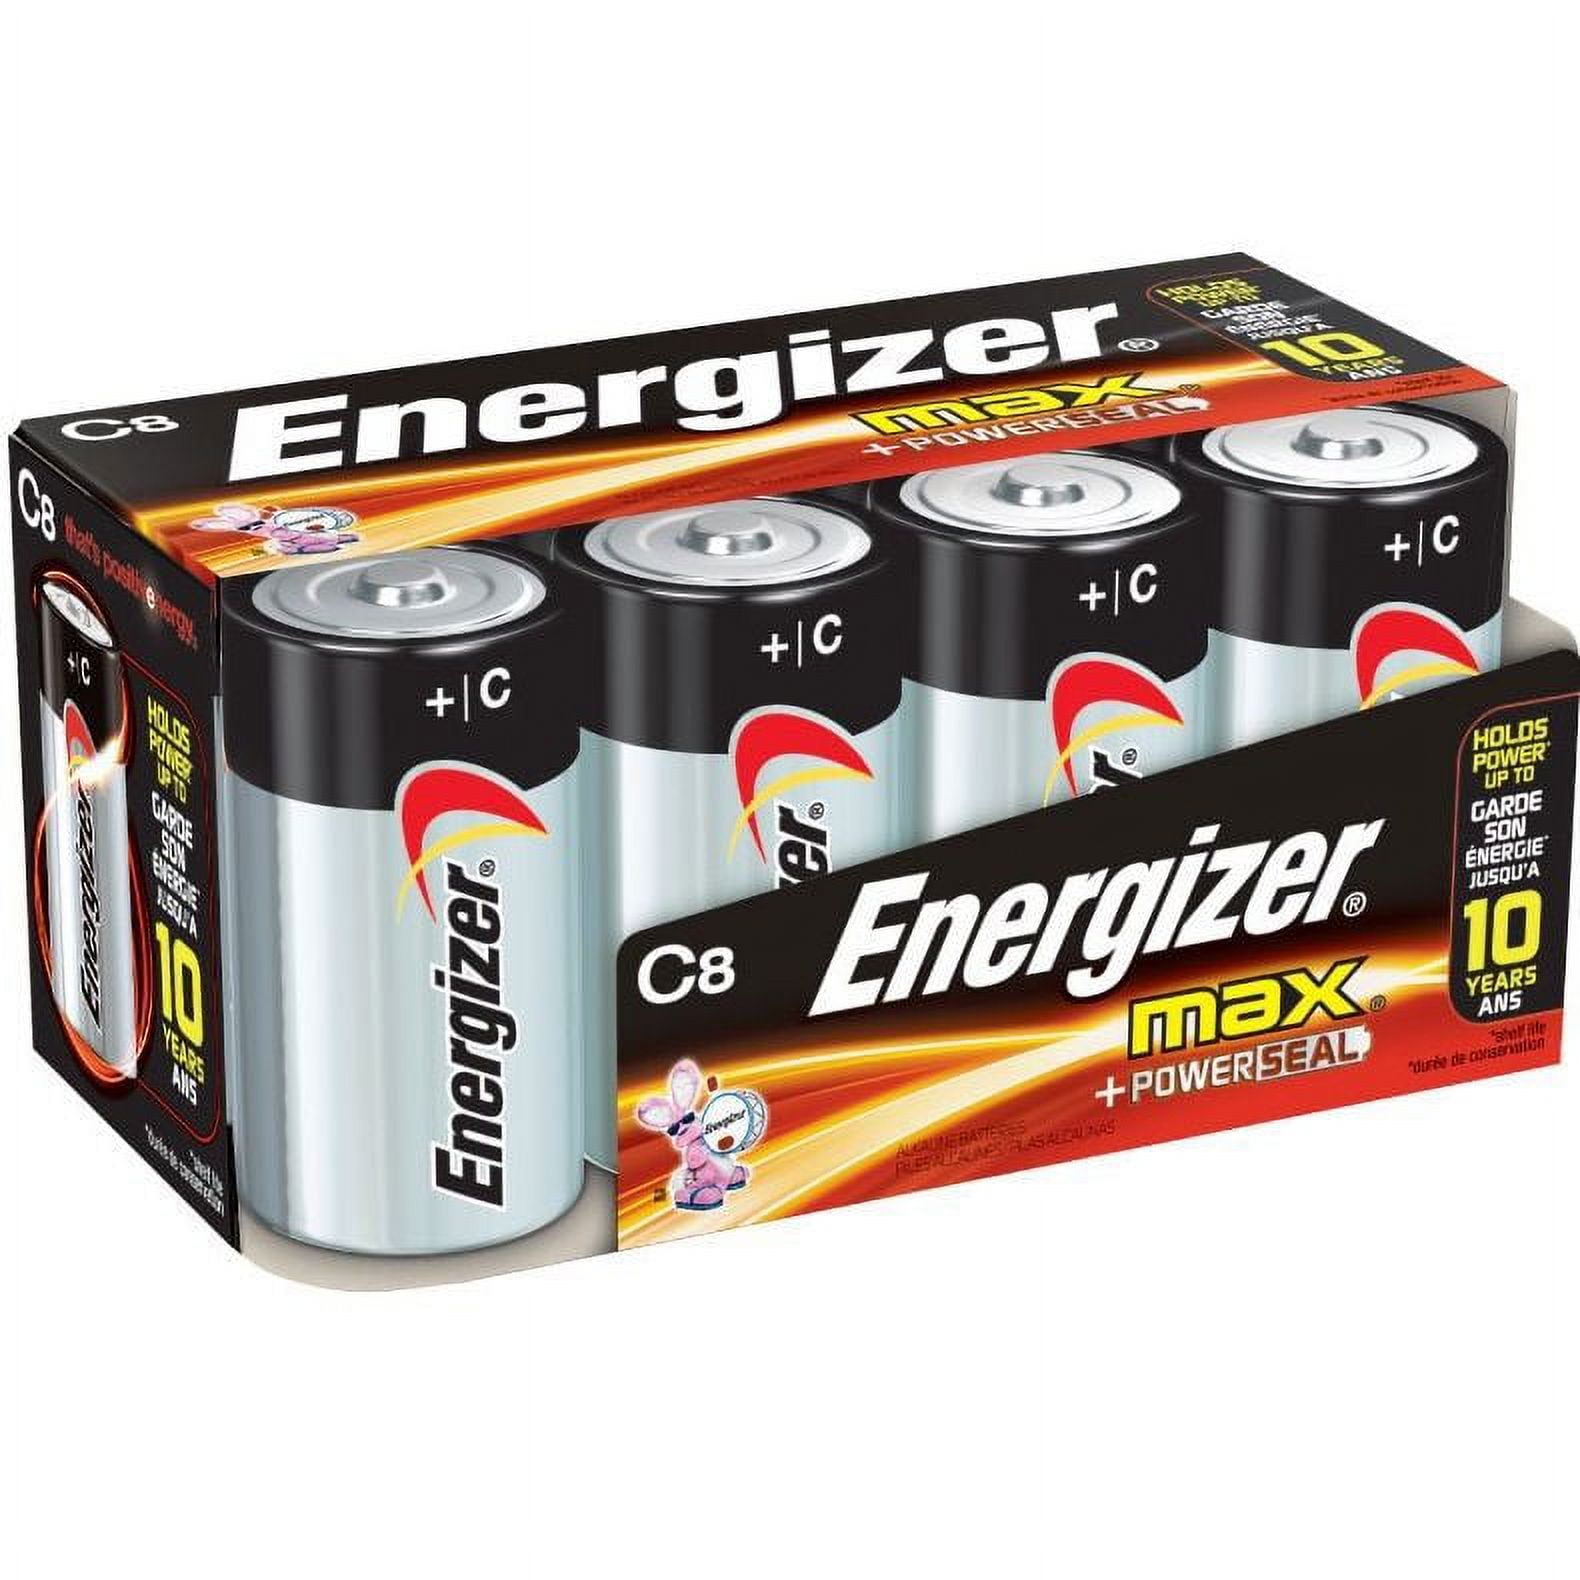 Energizer Max AA Alkaline Batteries x8